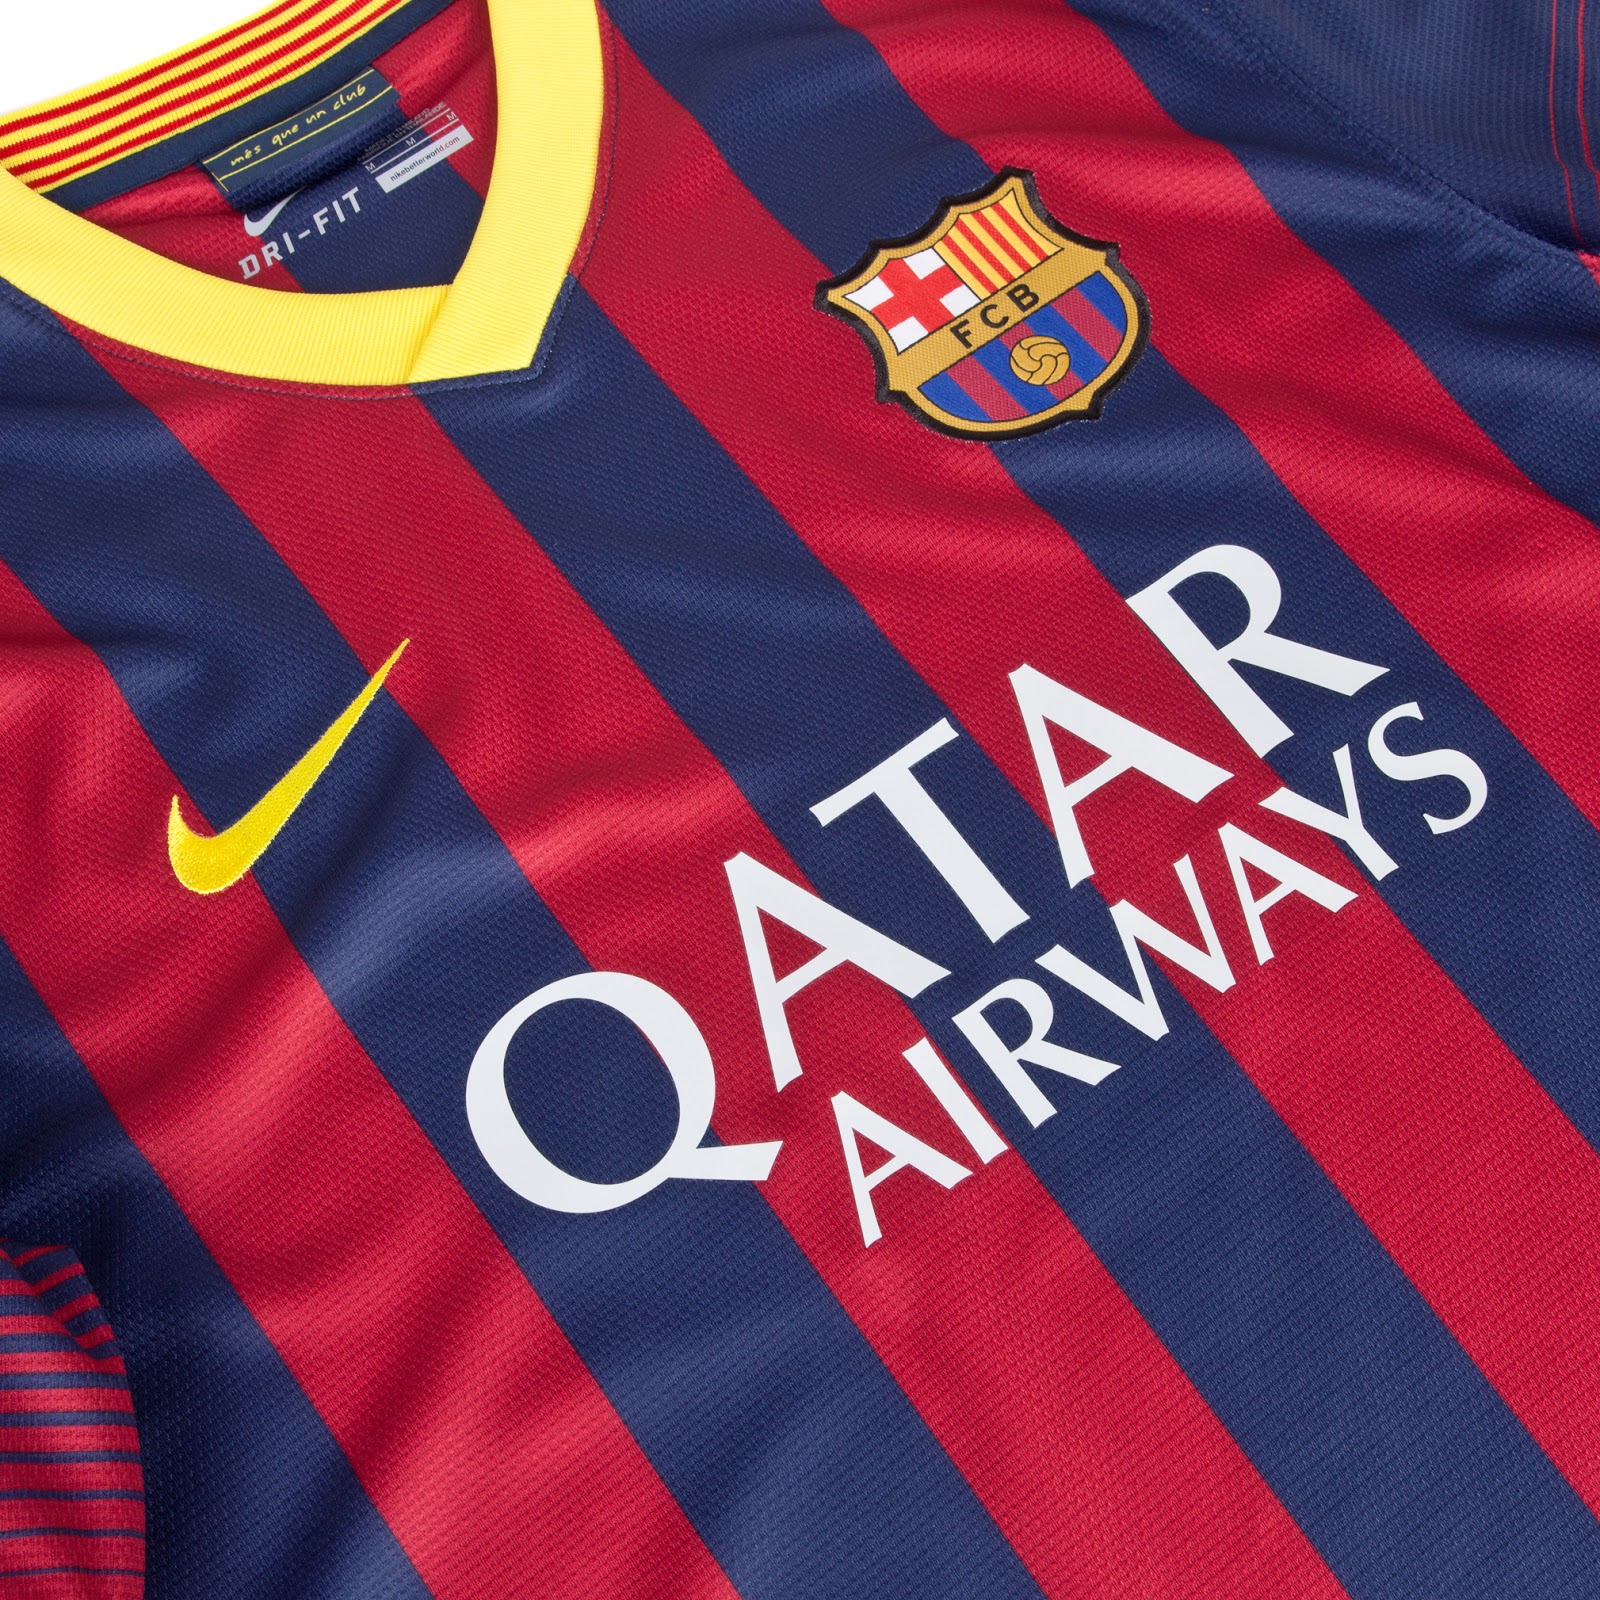 FC Barcelona 13/14 Home + Away Kits Released + Third Kit